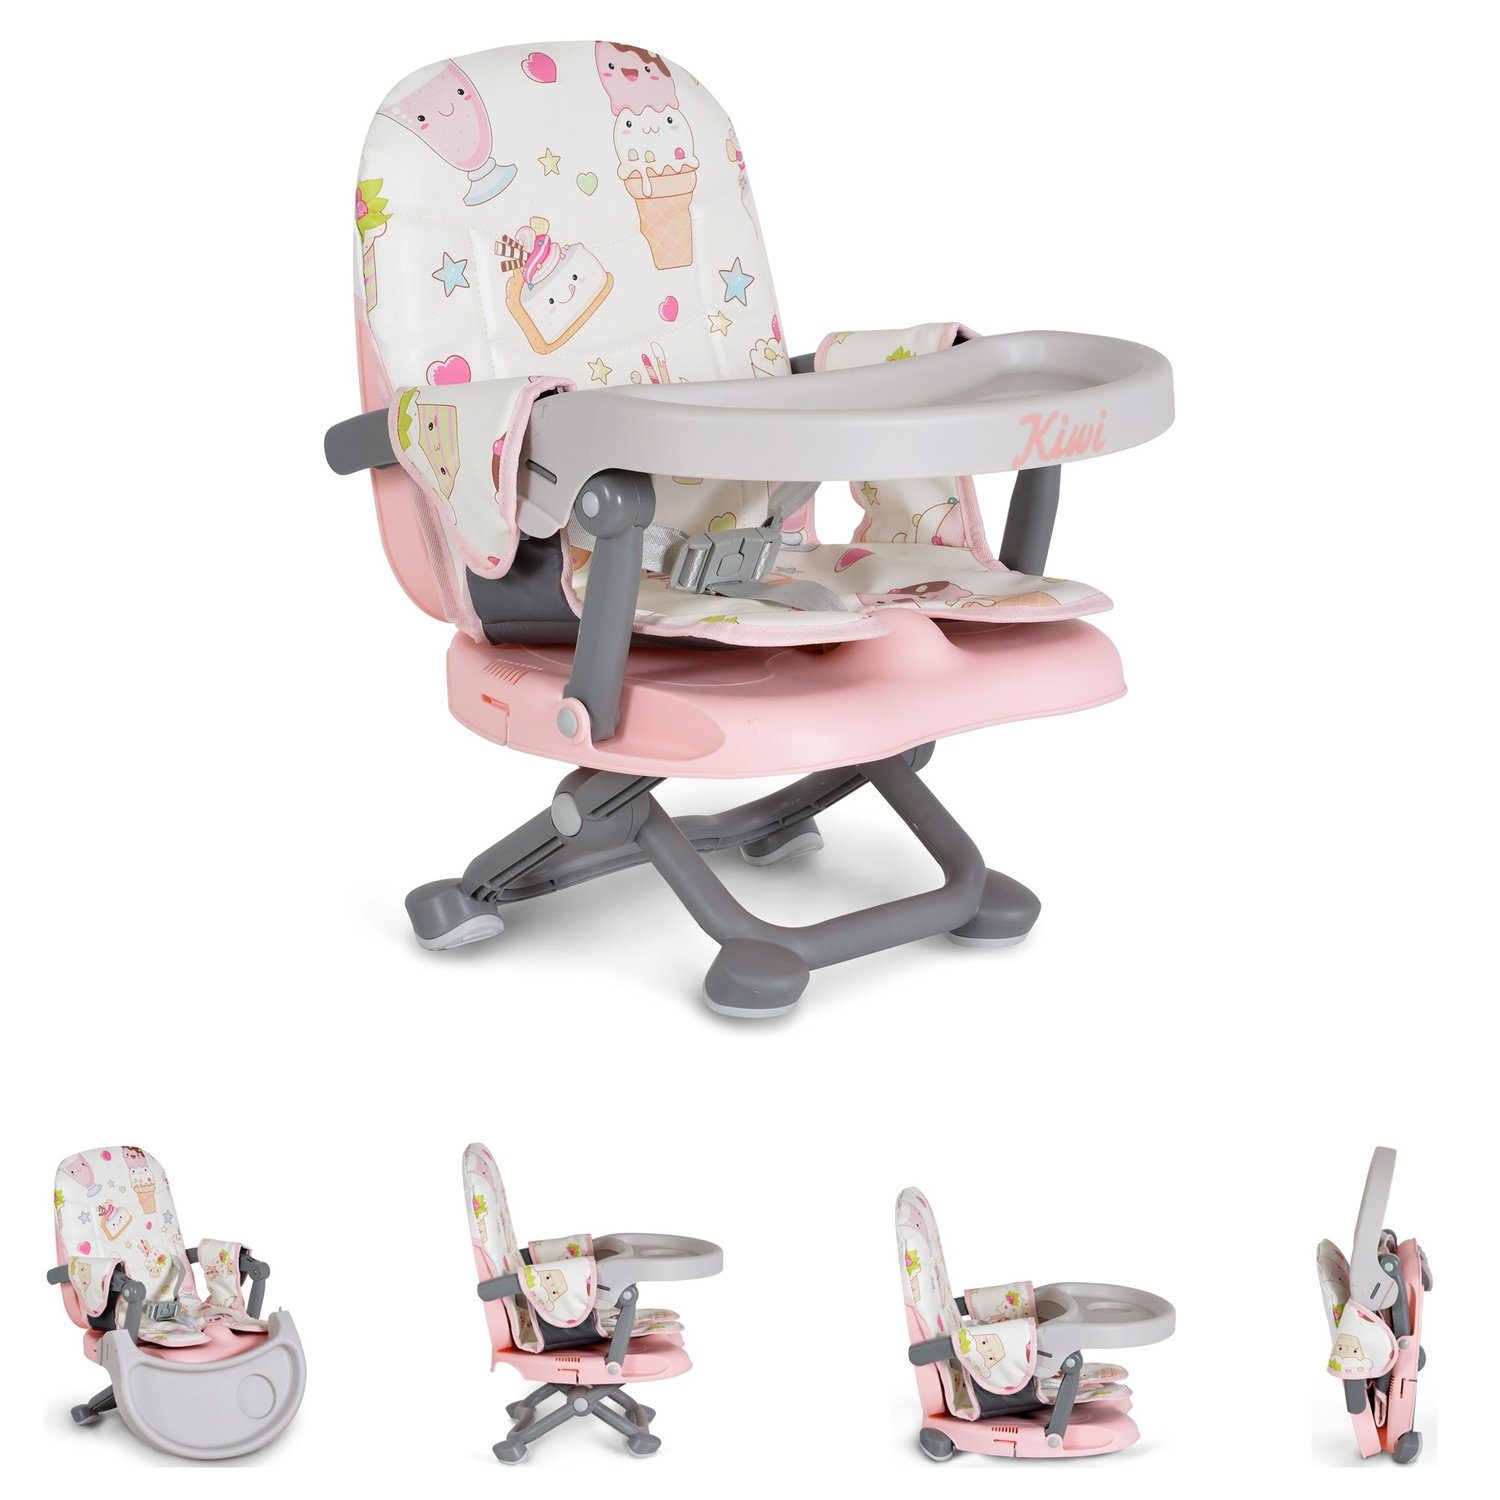 Moni Stuhl Kinderstuhl Kiwi, Kinder Stuhl-, Sitzerhöhung, Boostersitz, Tisch, klappbar rosa Kuchen | Stühle